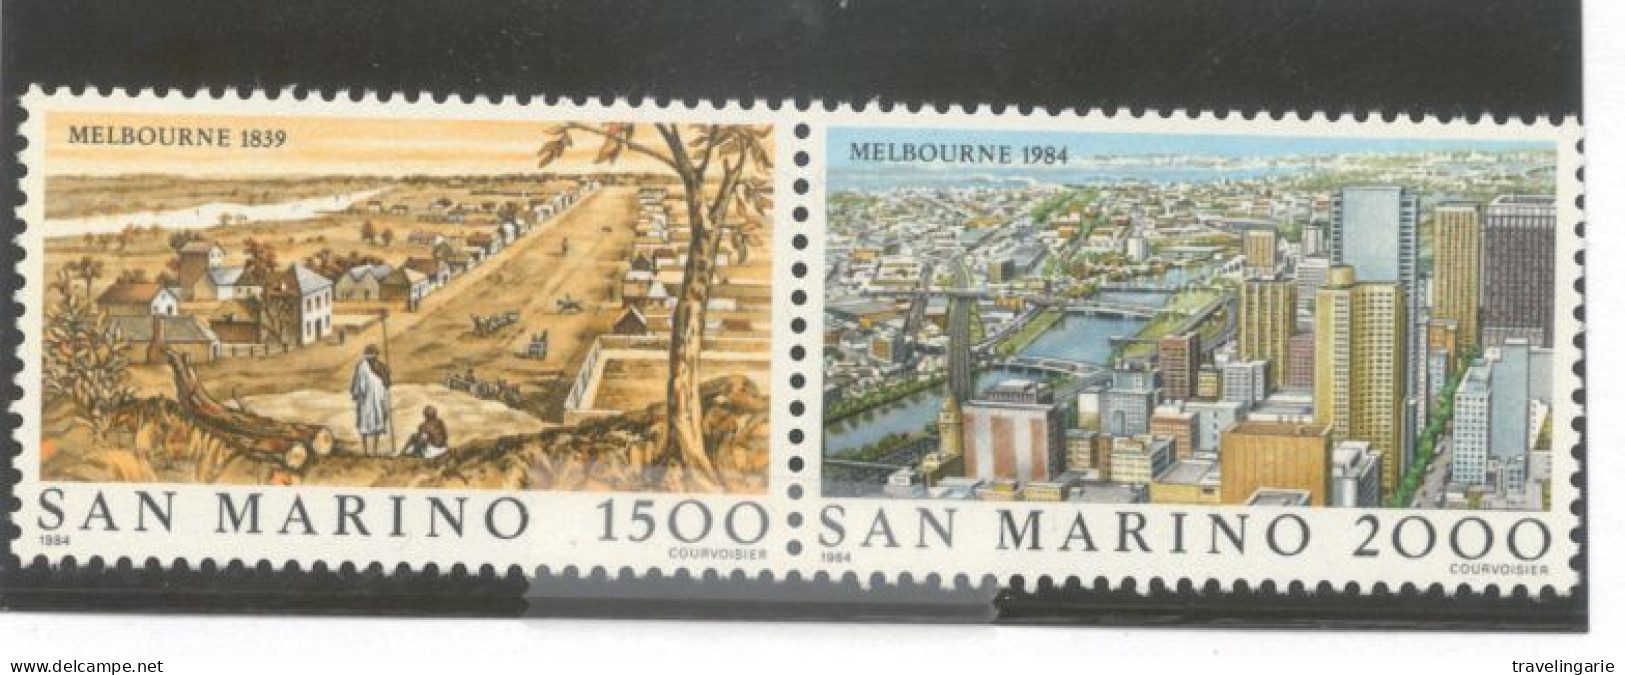 San Marino 1984 Famous Cities Melbourne MNH ** Se-tenant Pair - Nuevos